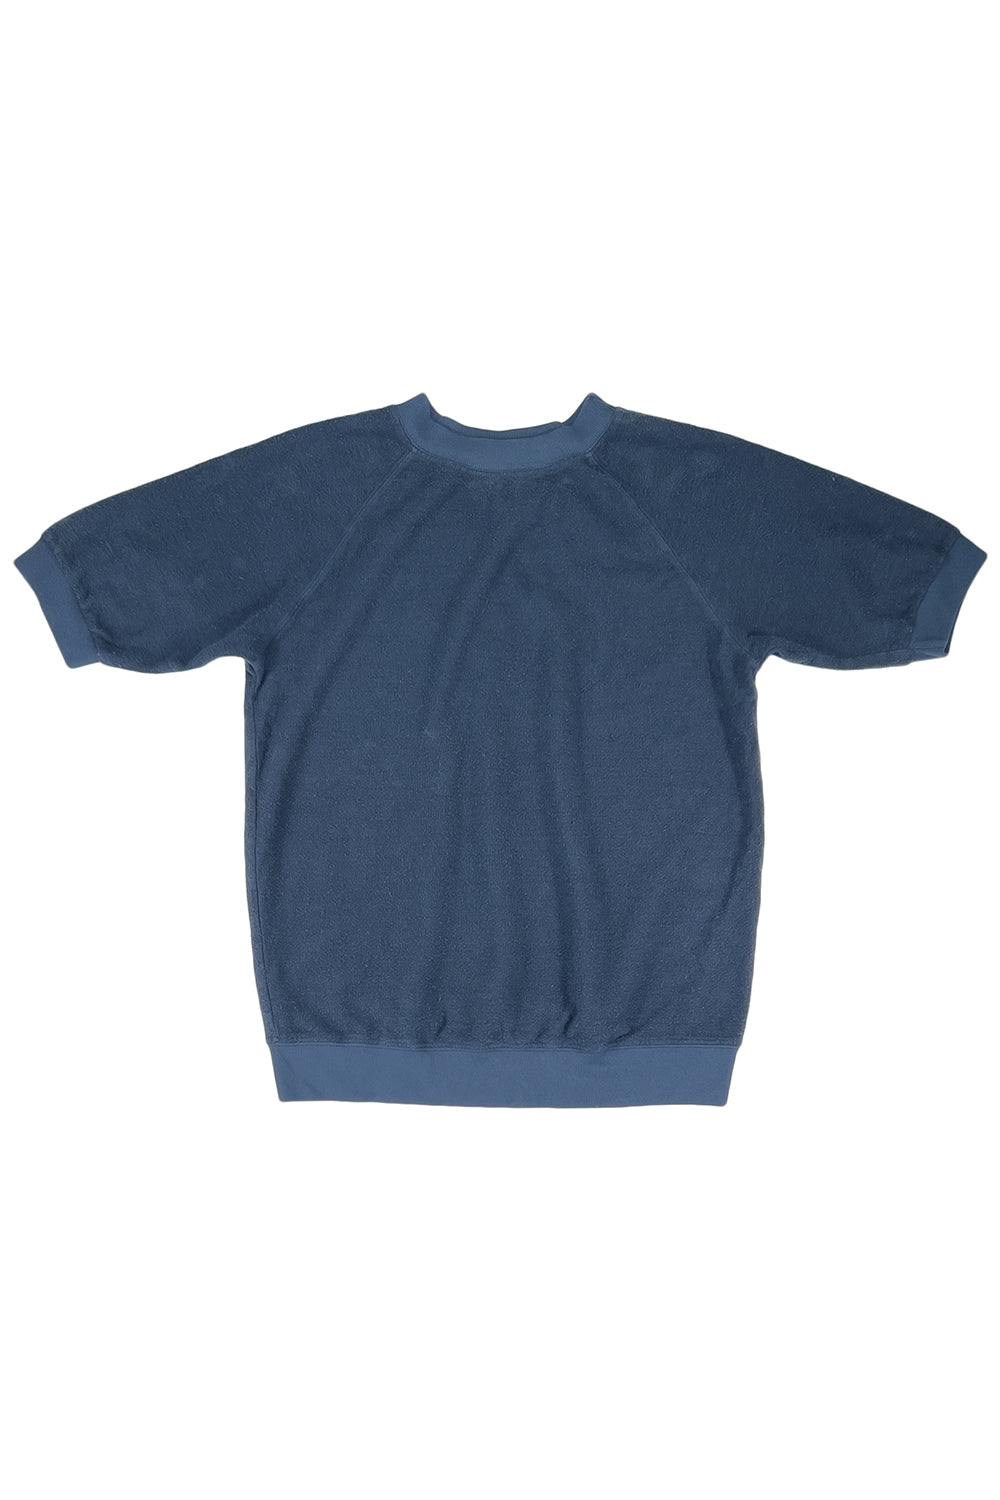 Short Sleeve Raglan Sherpa Sweatshirt | Jungmaven Hemp Clothing & Accessories / Color: Navy